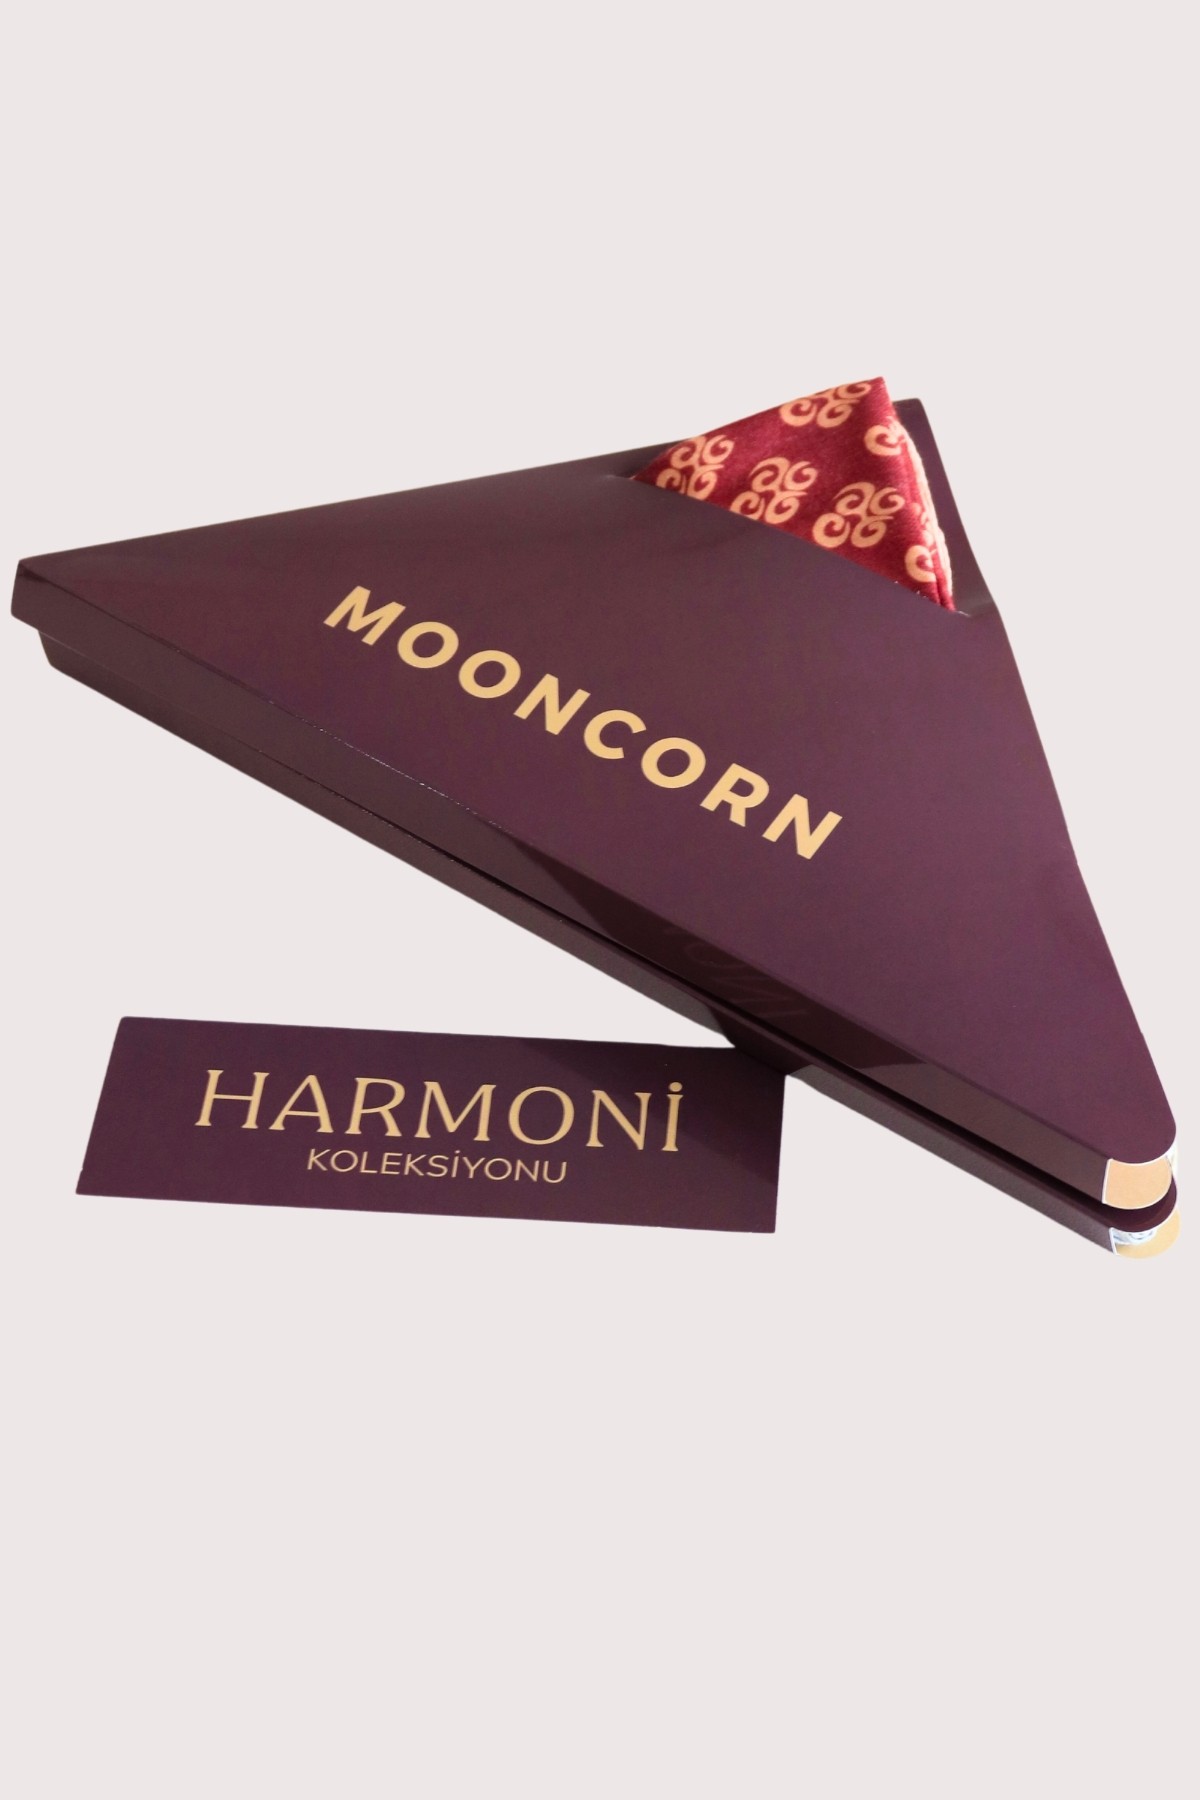 Harmoni Scarf Collection Color Box